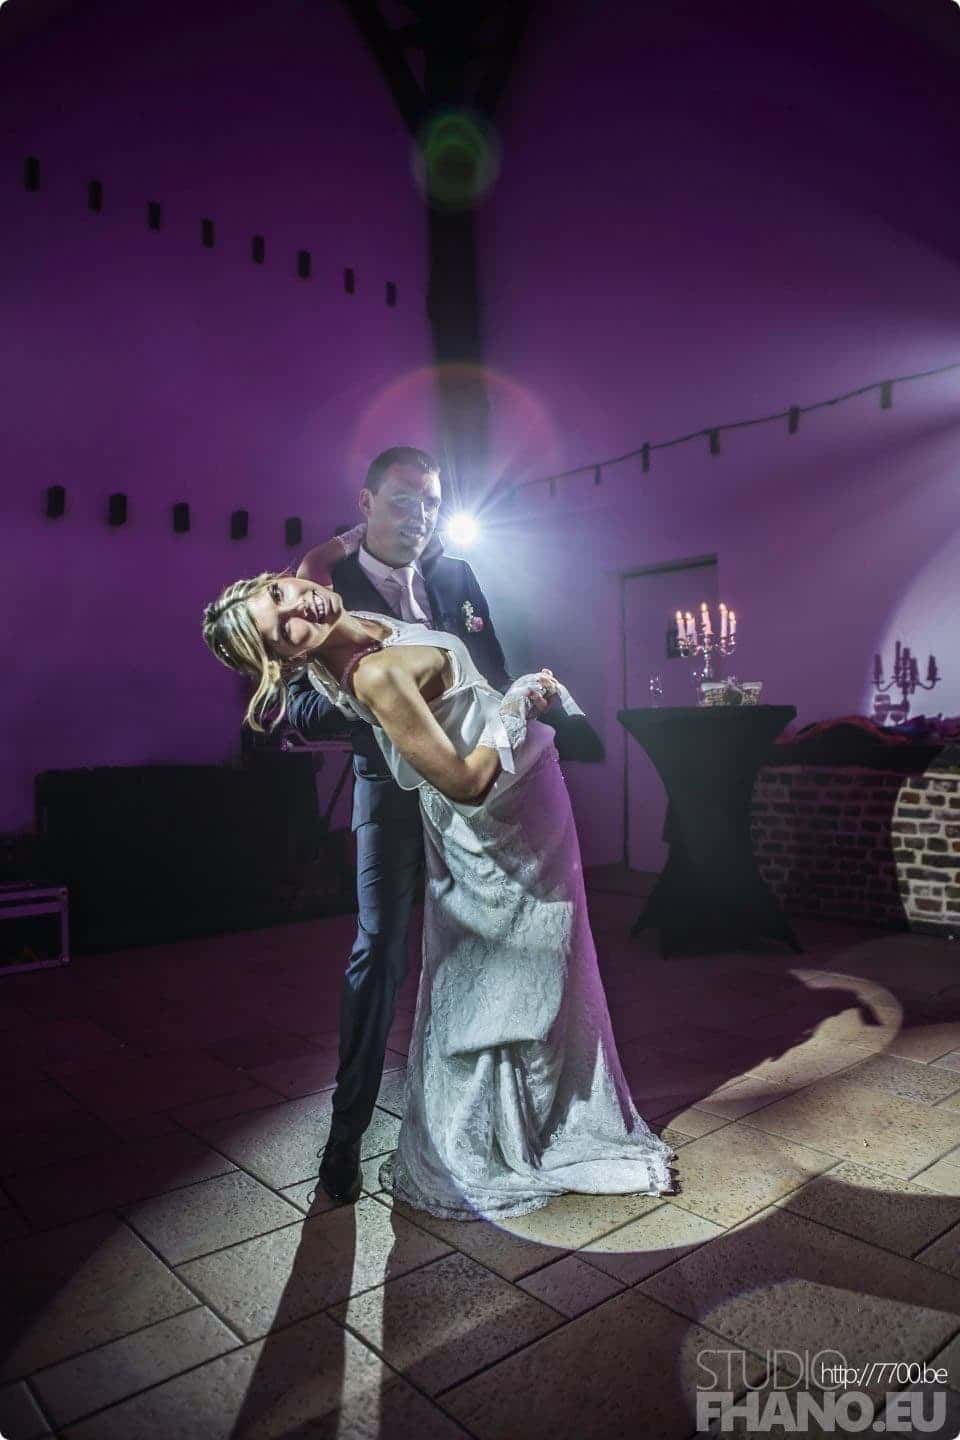 Photos by Studio Fhano.eu - https://7700.be #photo #photographe #mariage #studio #portrait #fhanoeu #7700be